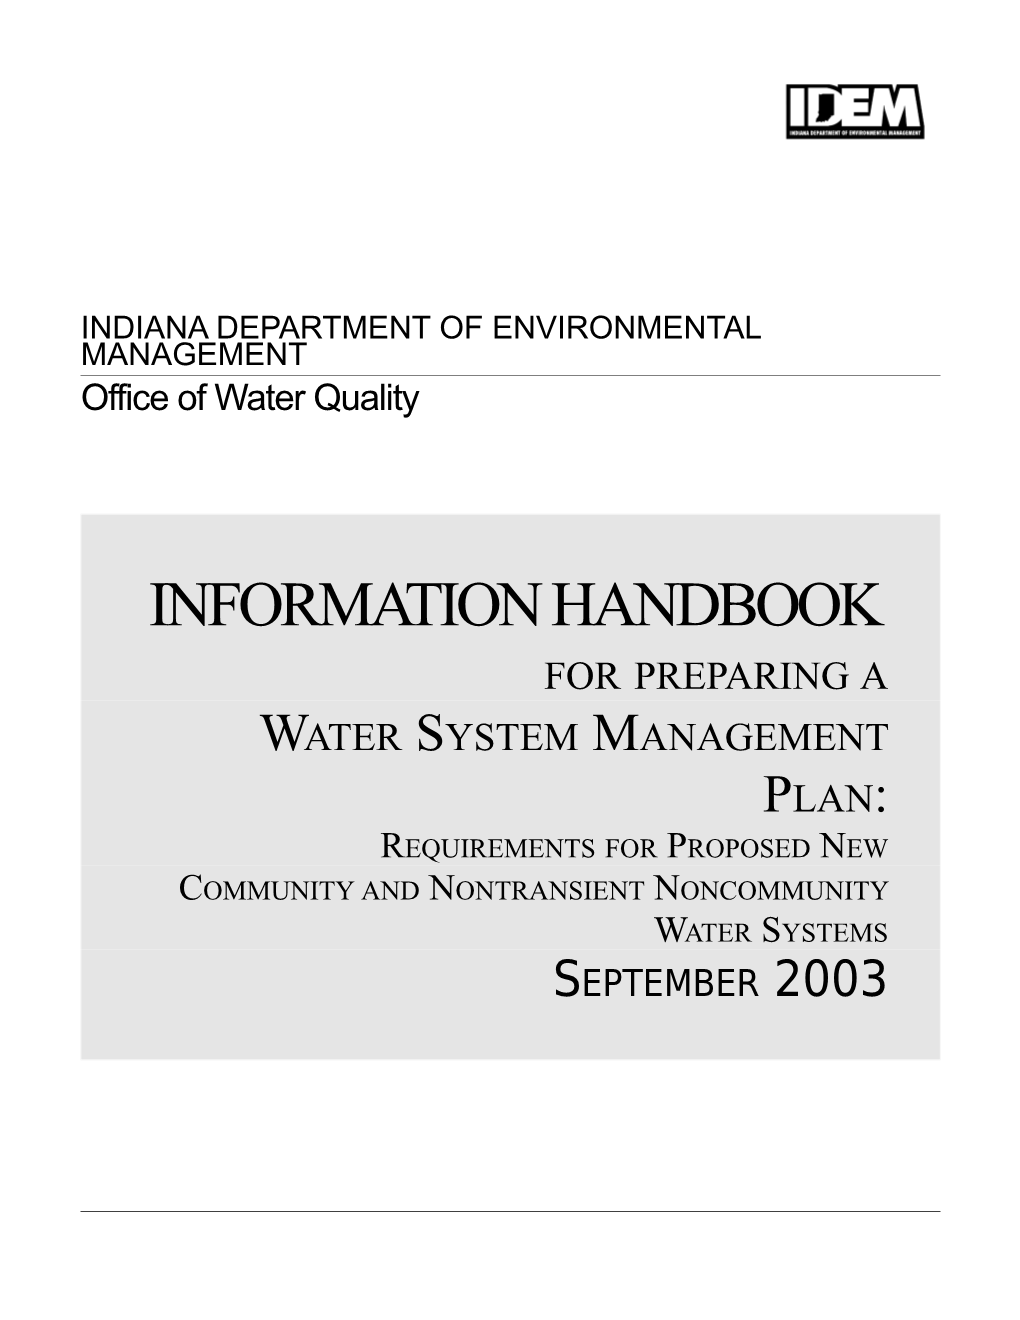 Information Handbook for Preparing a Water System Management Plan